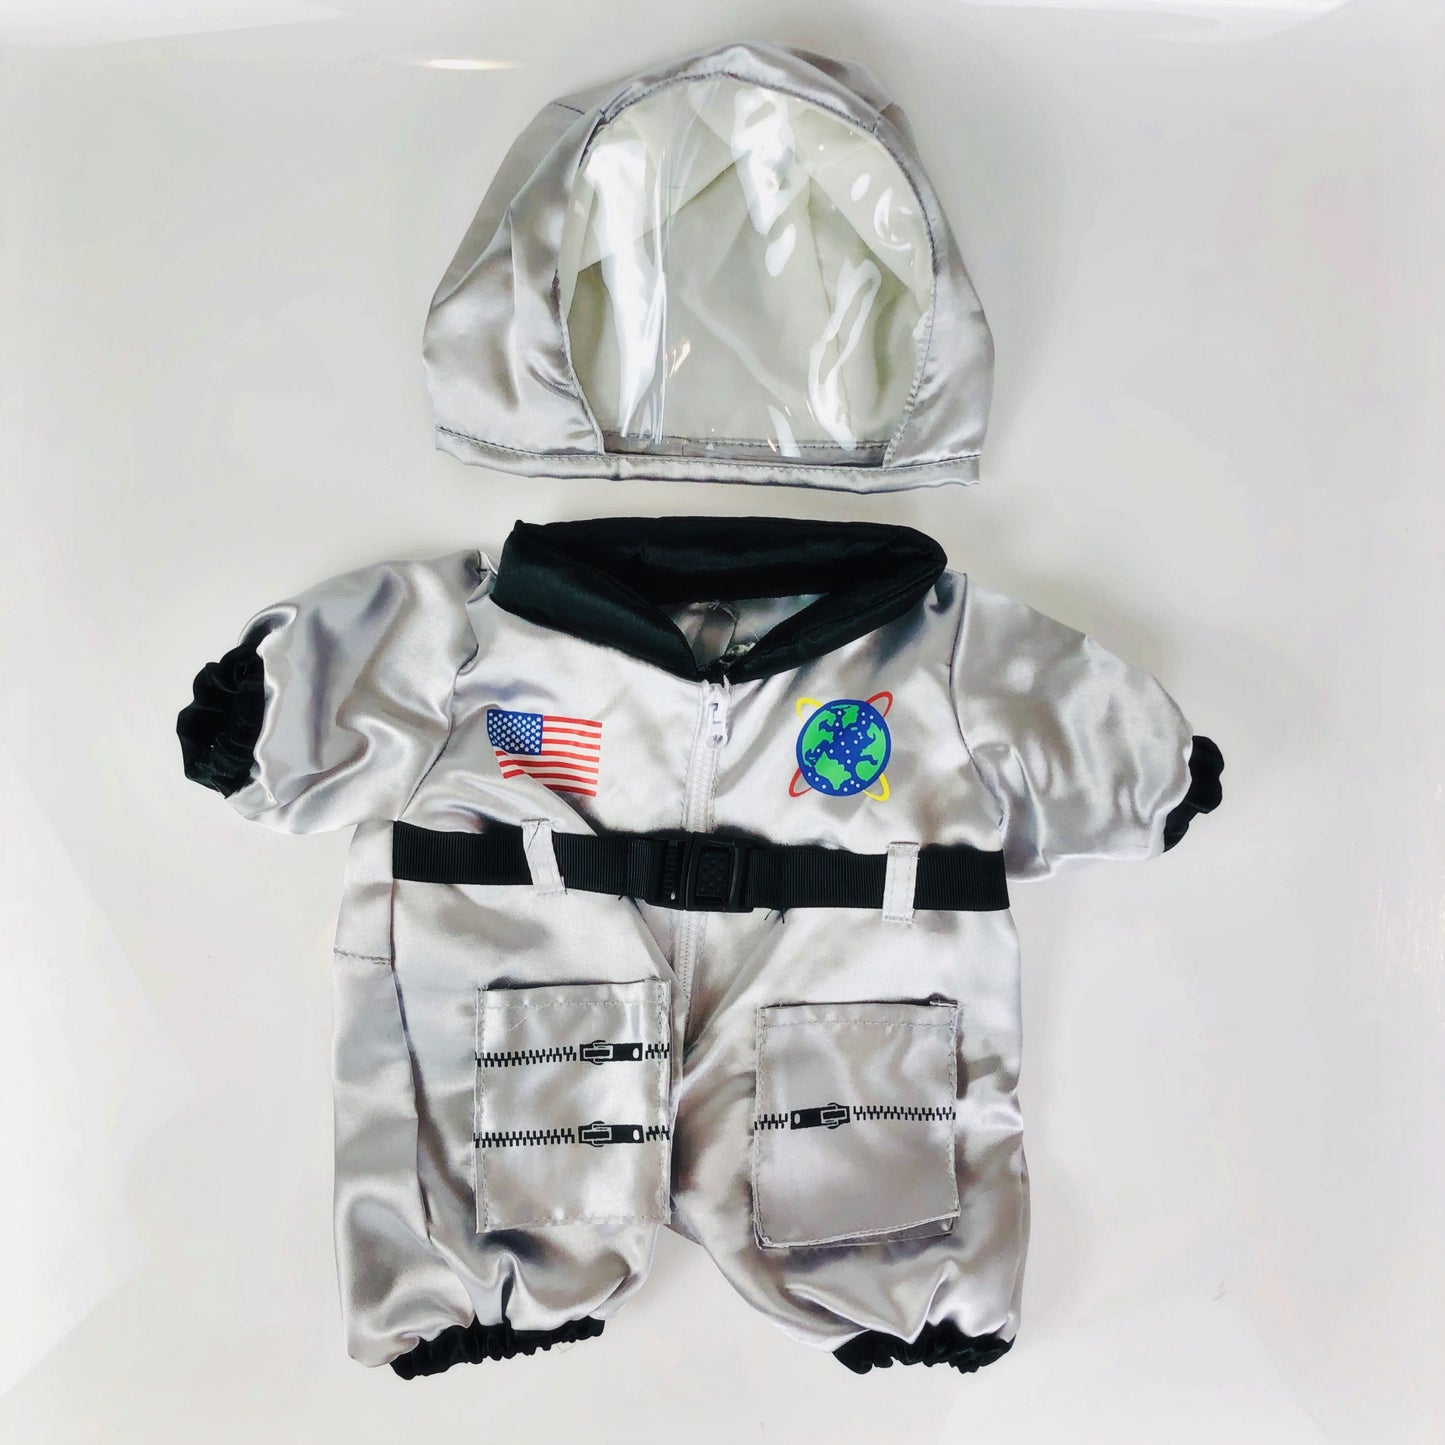 Astronaut Bear Outfit